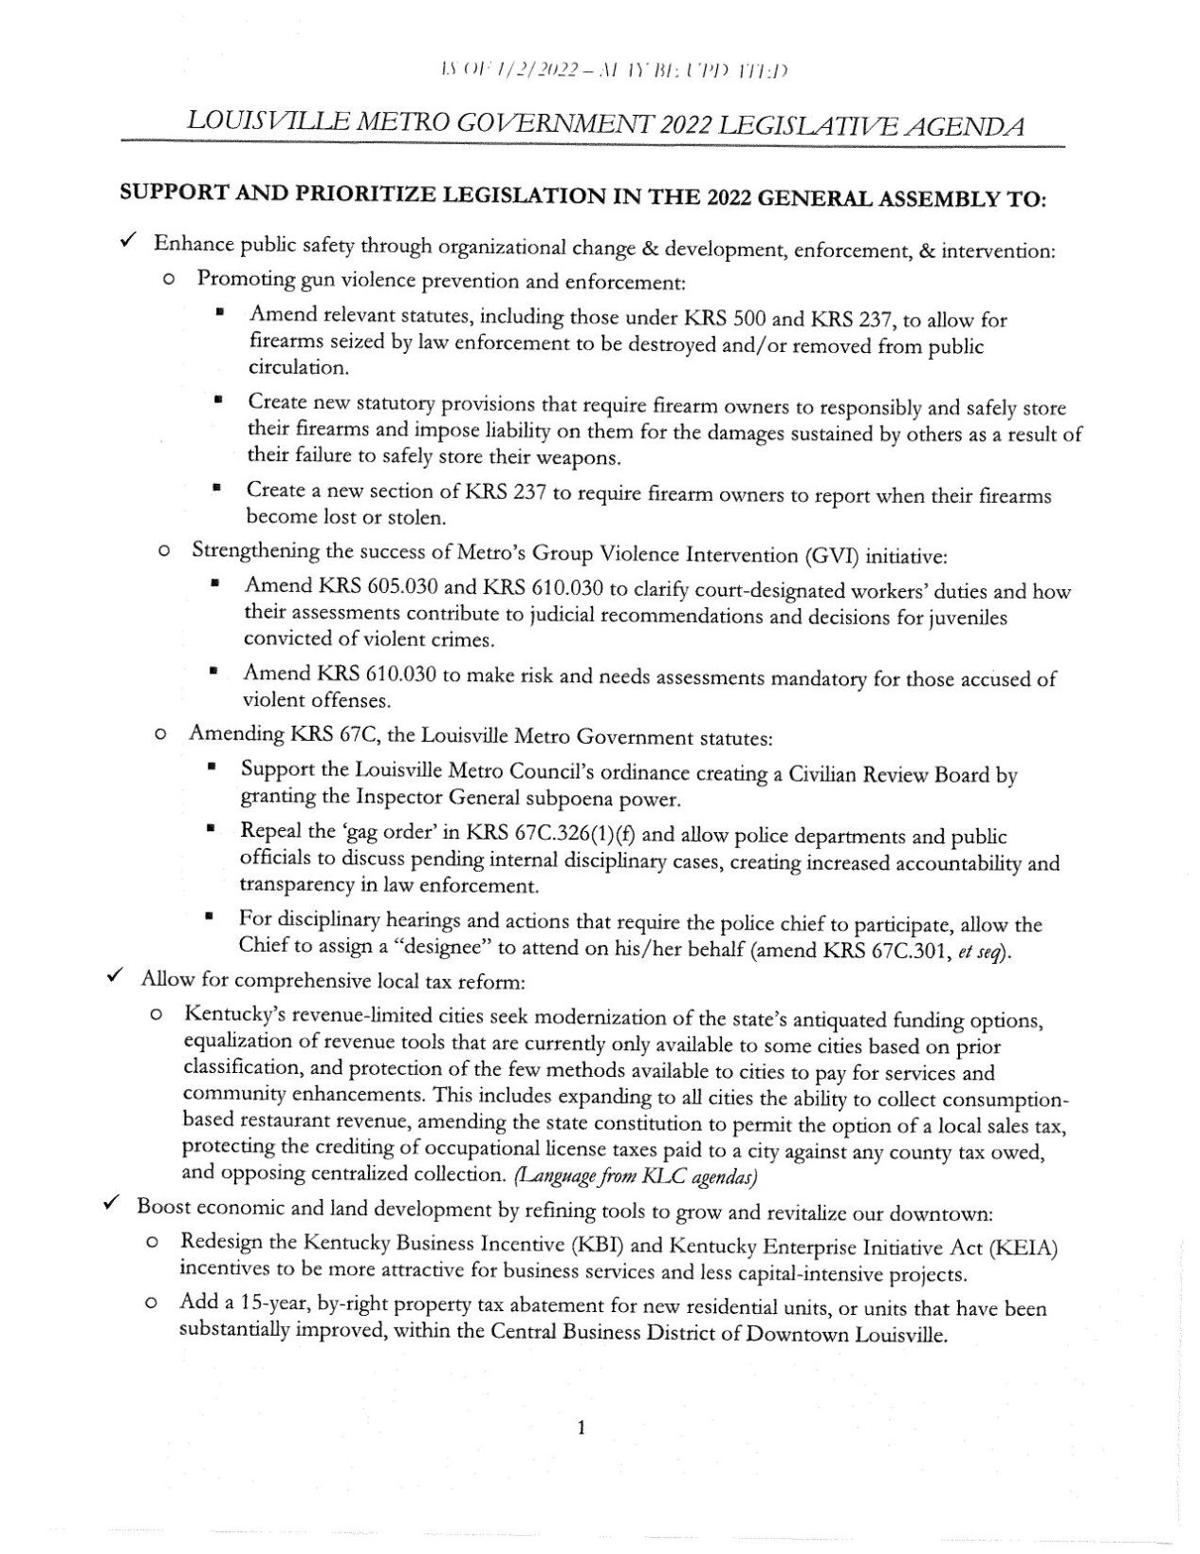 Louisville Metro Government 2022 Legislative Agenda